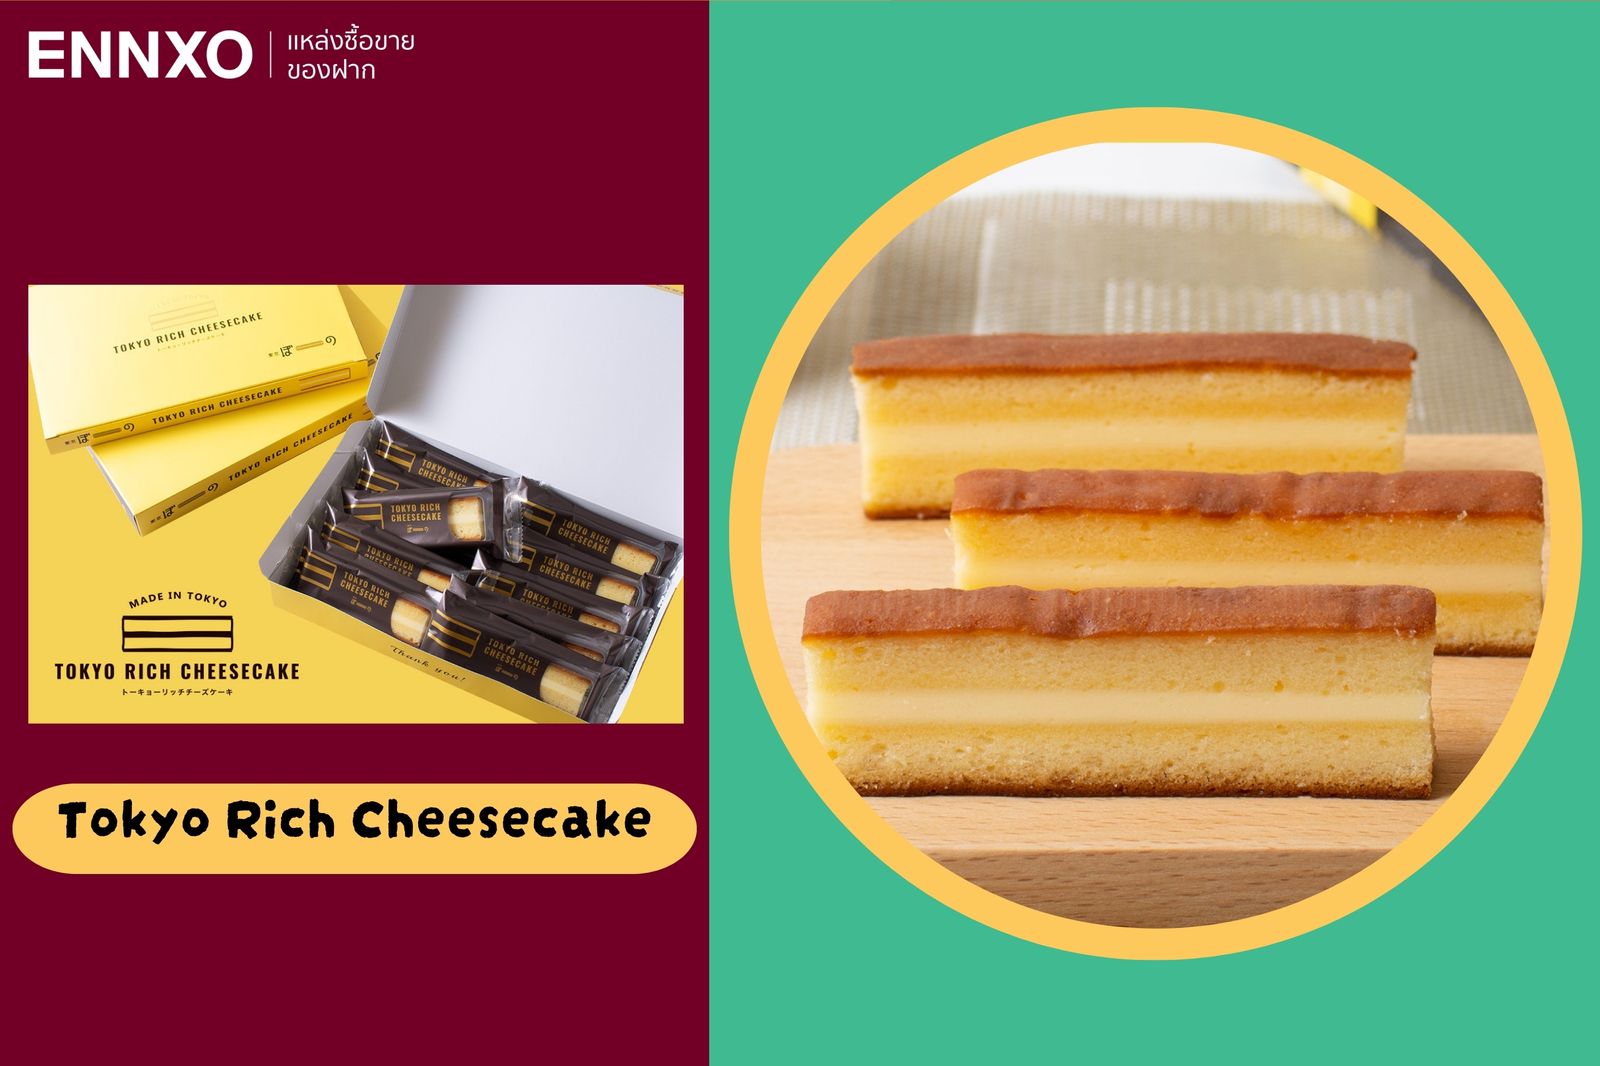  Tokyo Rich Cheesecake ชีสเค้กเนื้อนุ่มขนาดพอดีคำ หนึ่งในของฝากยอดนิยมของญี่ปุ่น